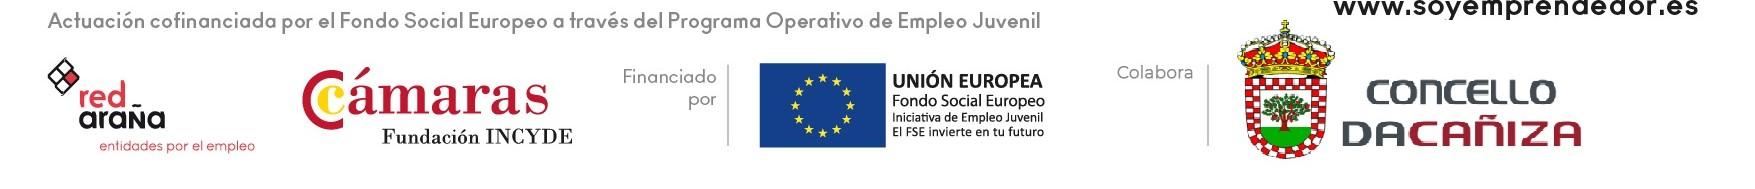 logo soy emprendedor Galicia y Fondo Social Europeo